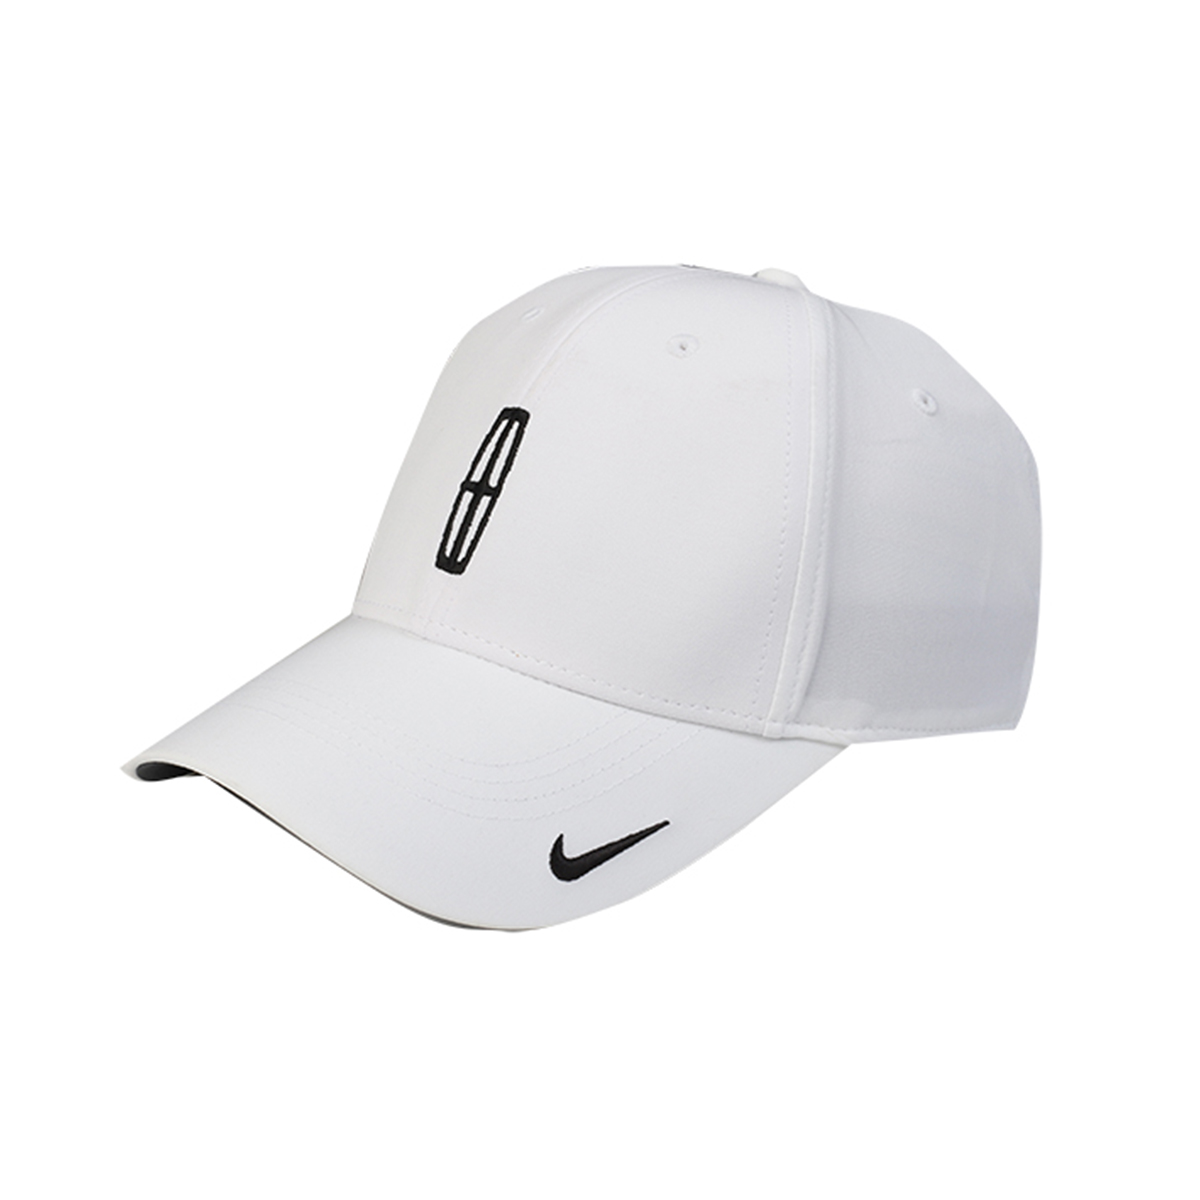 Nike Legacy Hat - White - Lincoln Retailer